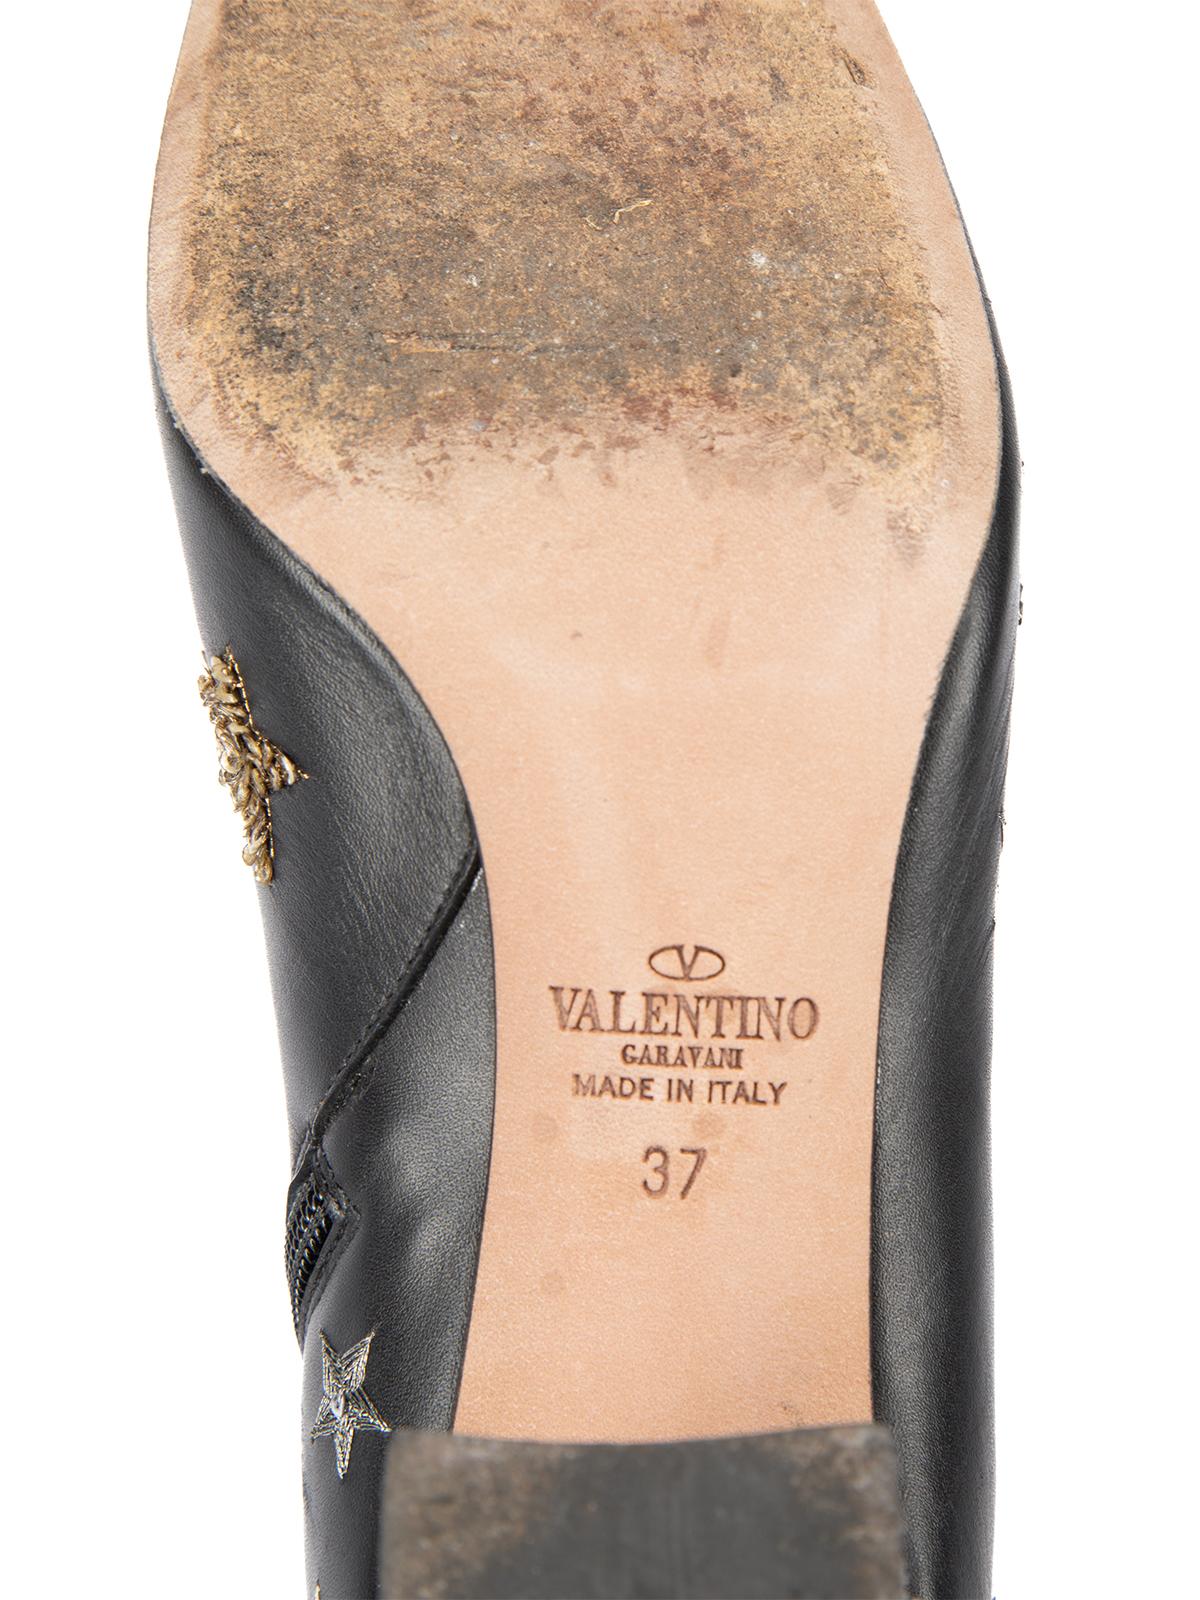 Pre-Loved Valentino Garavani Women's Black Star Embellished Ankle Boots 3